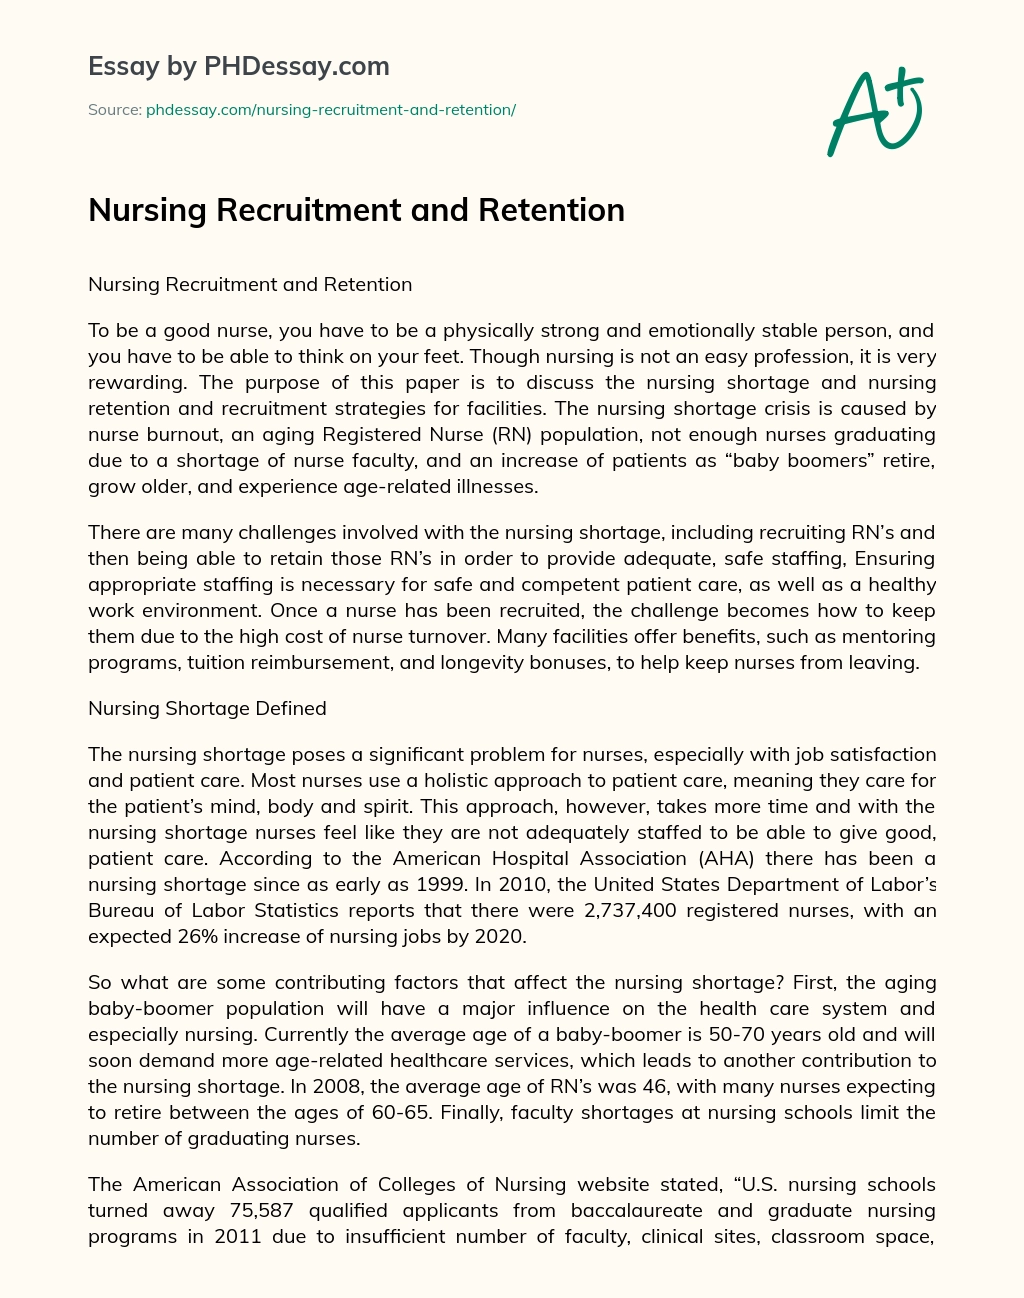 Nursing Recruitment and Retention essay